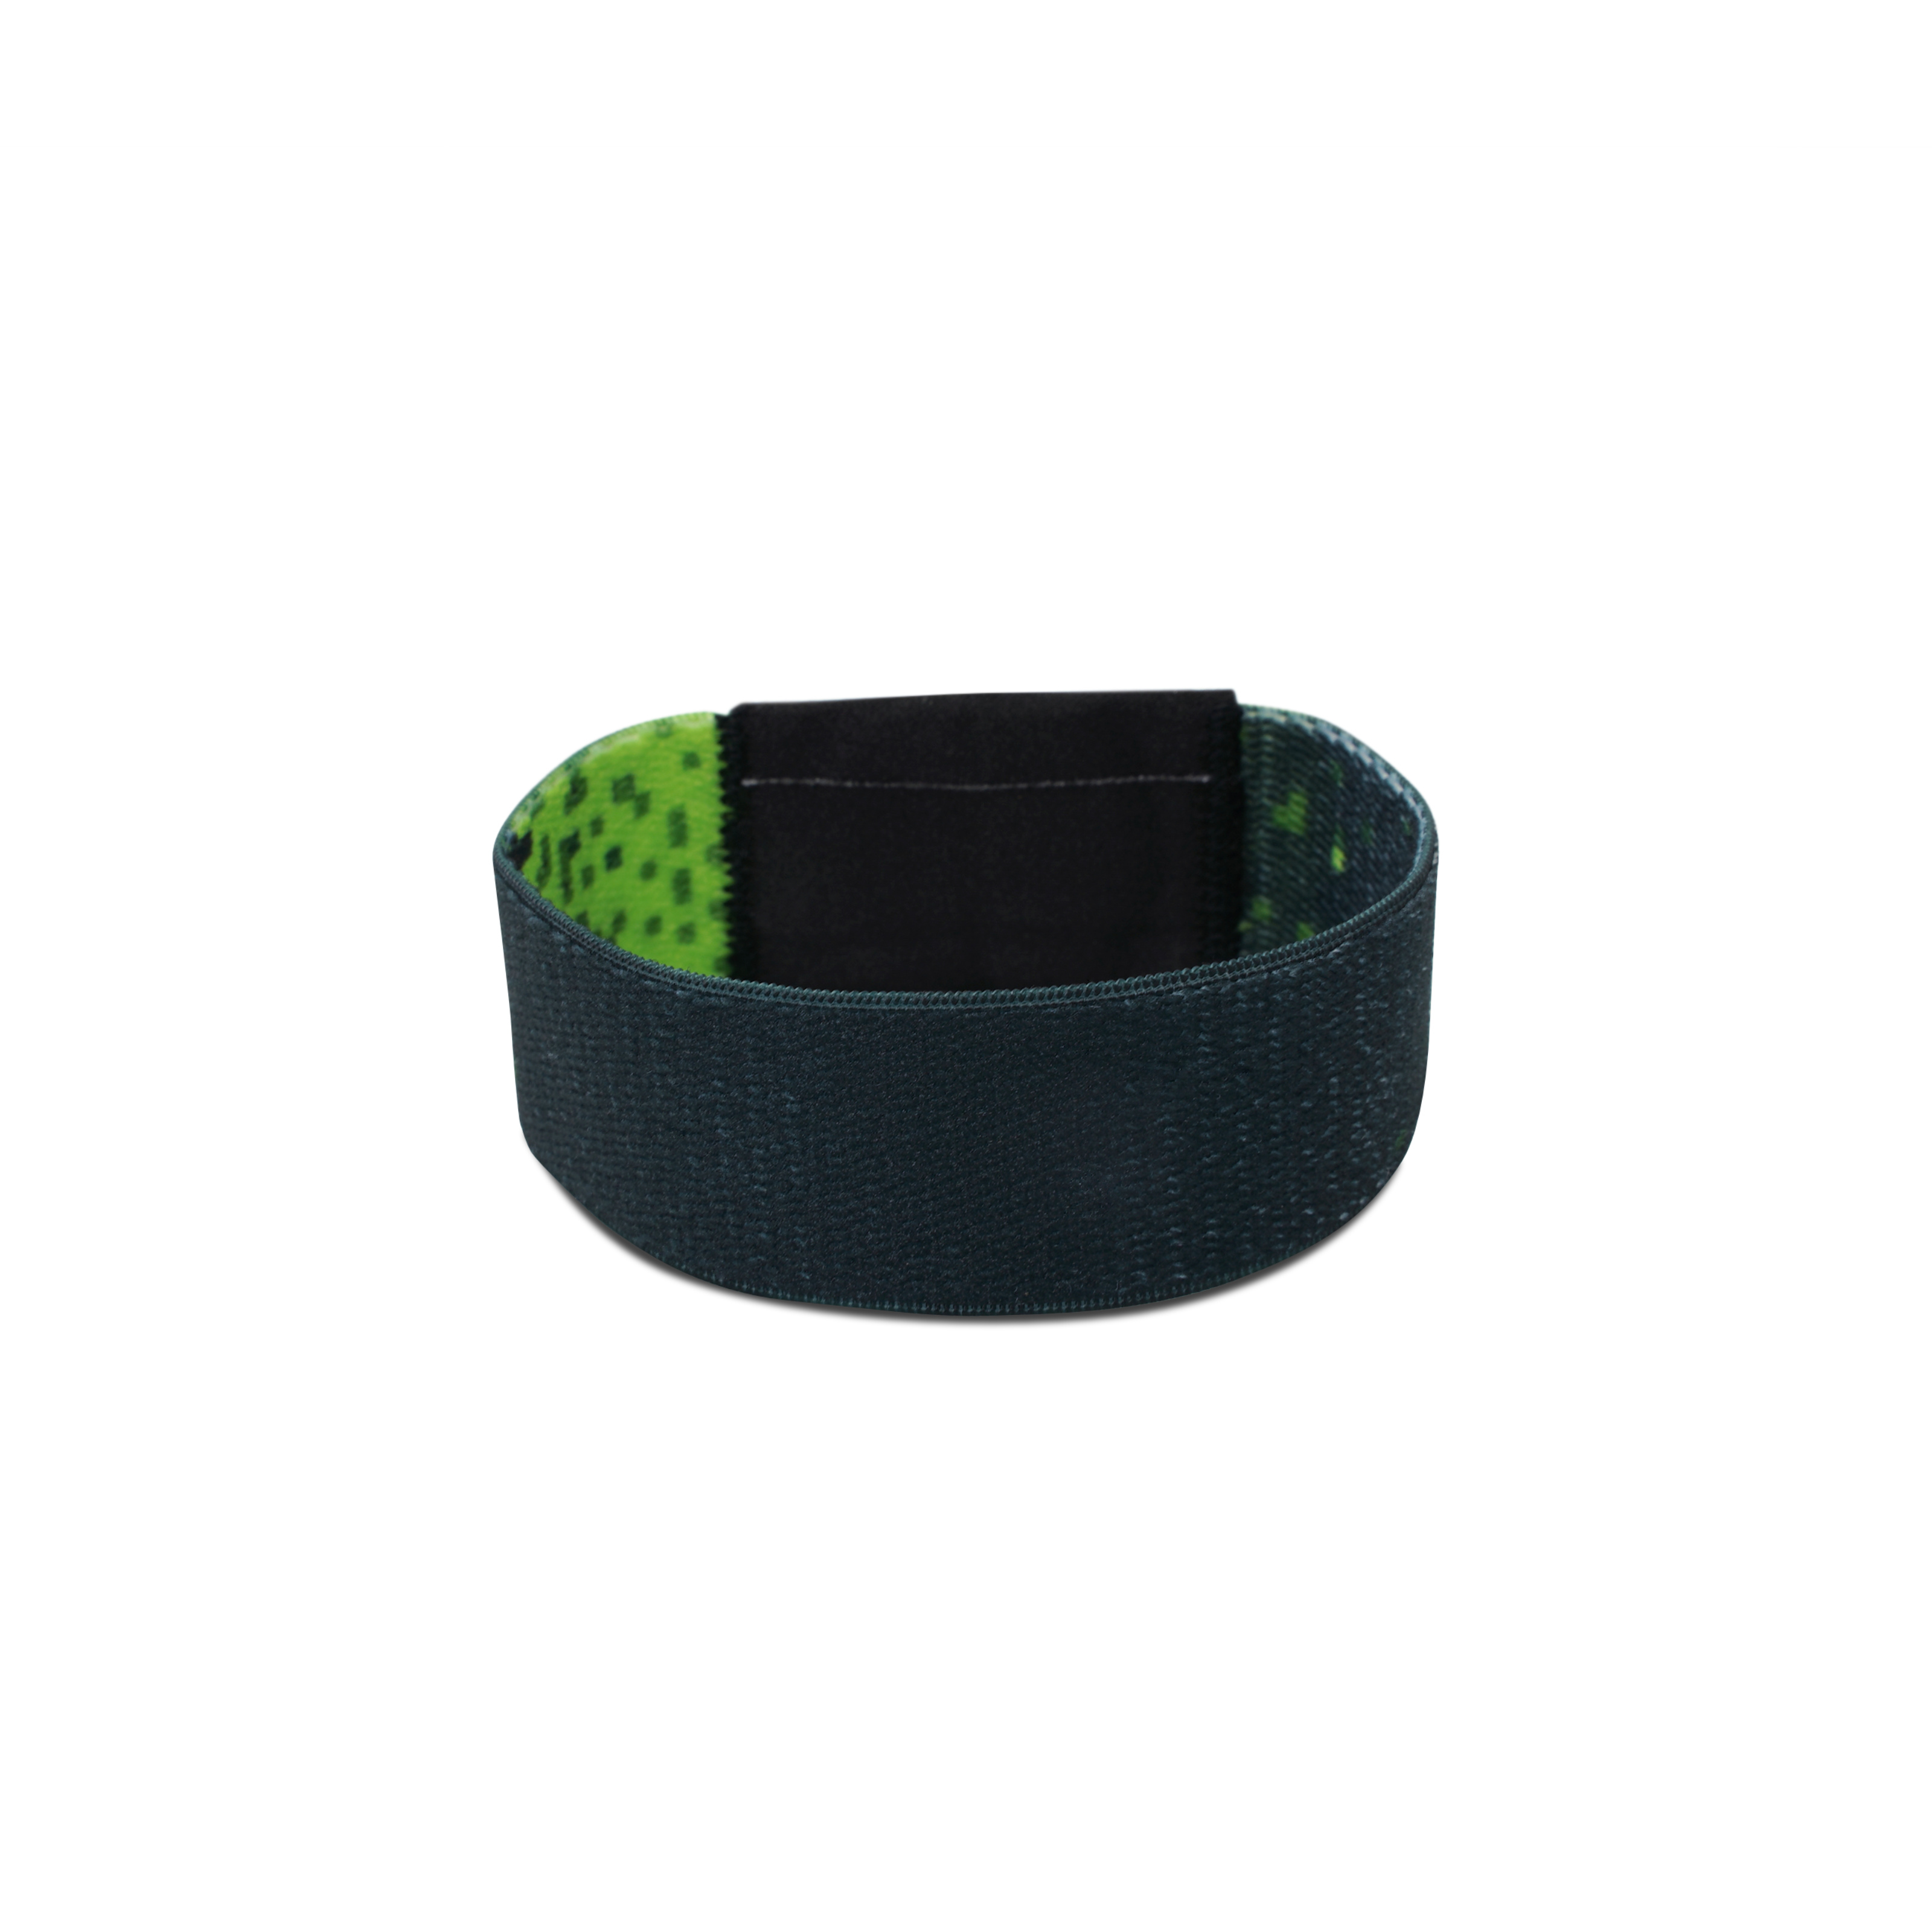  NFC Armband Stoff - 185 x 25 mm - NTAG216 - 924 Byte - dunkelgrün - Größe M - Durchmesser 59 mm